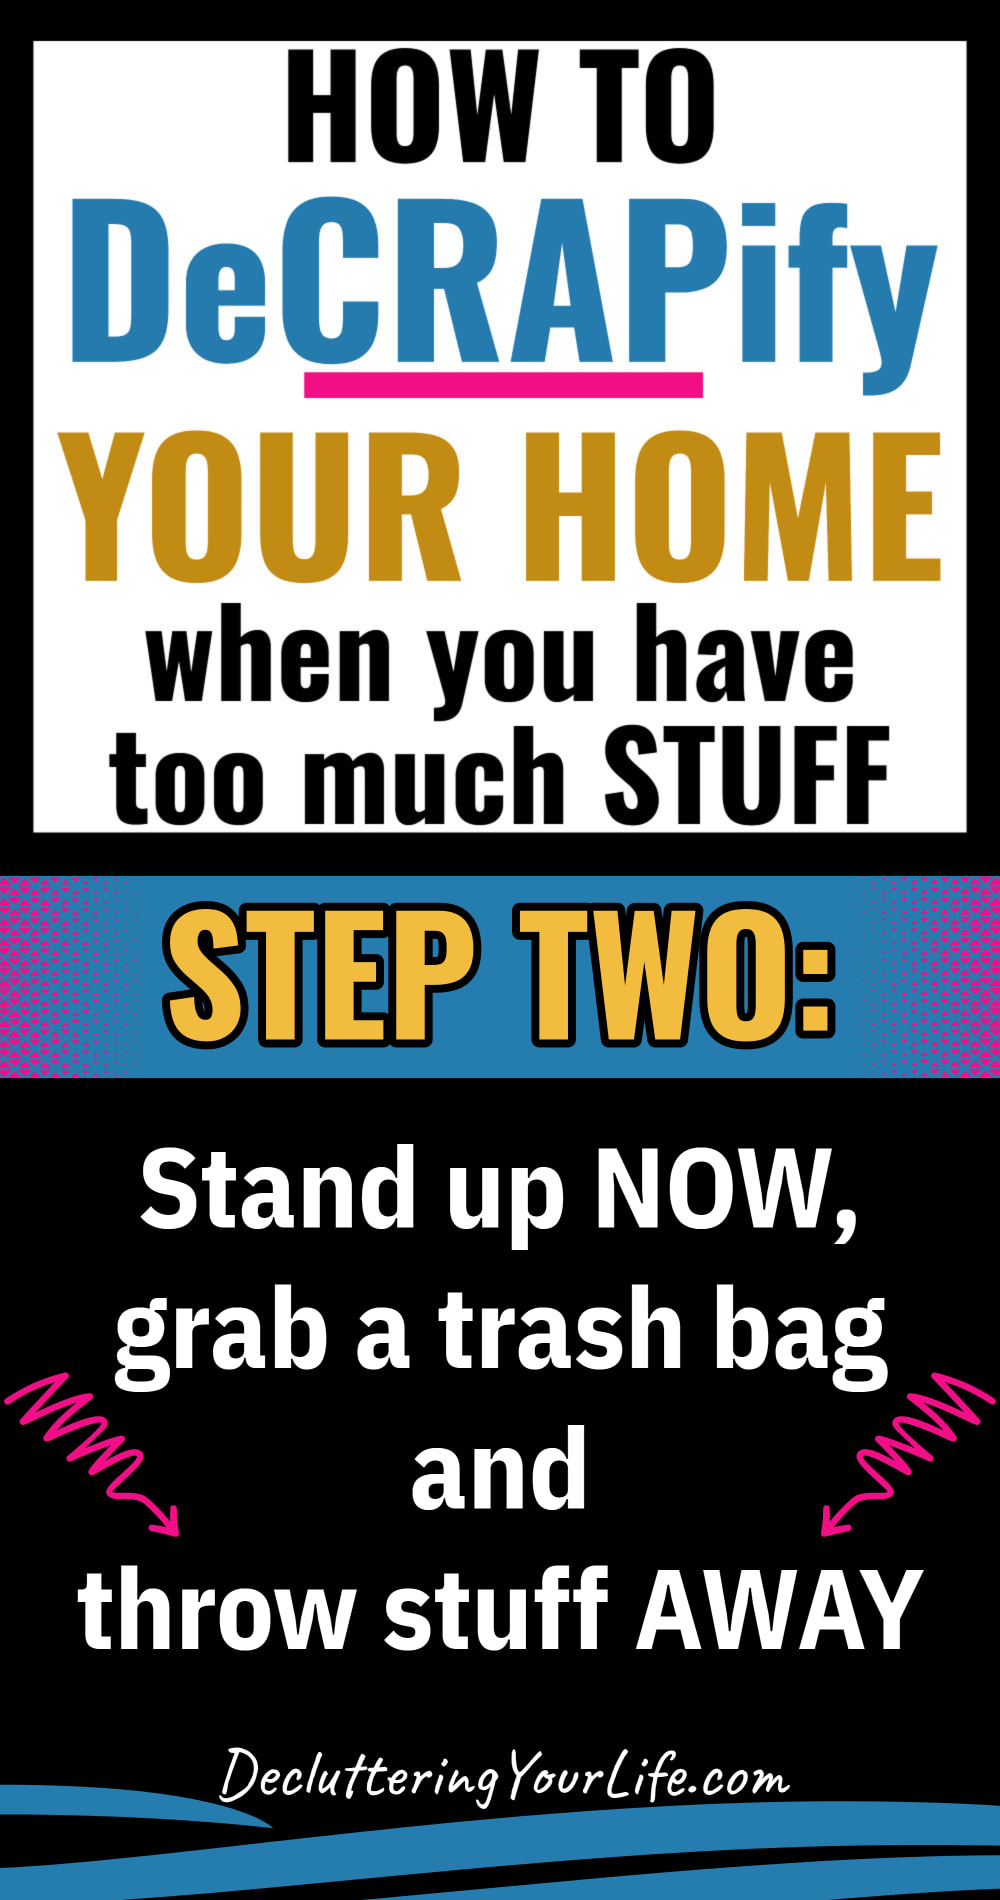 Decrapify your home step 2 - throw stuff away